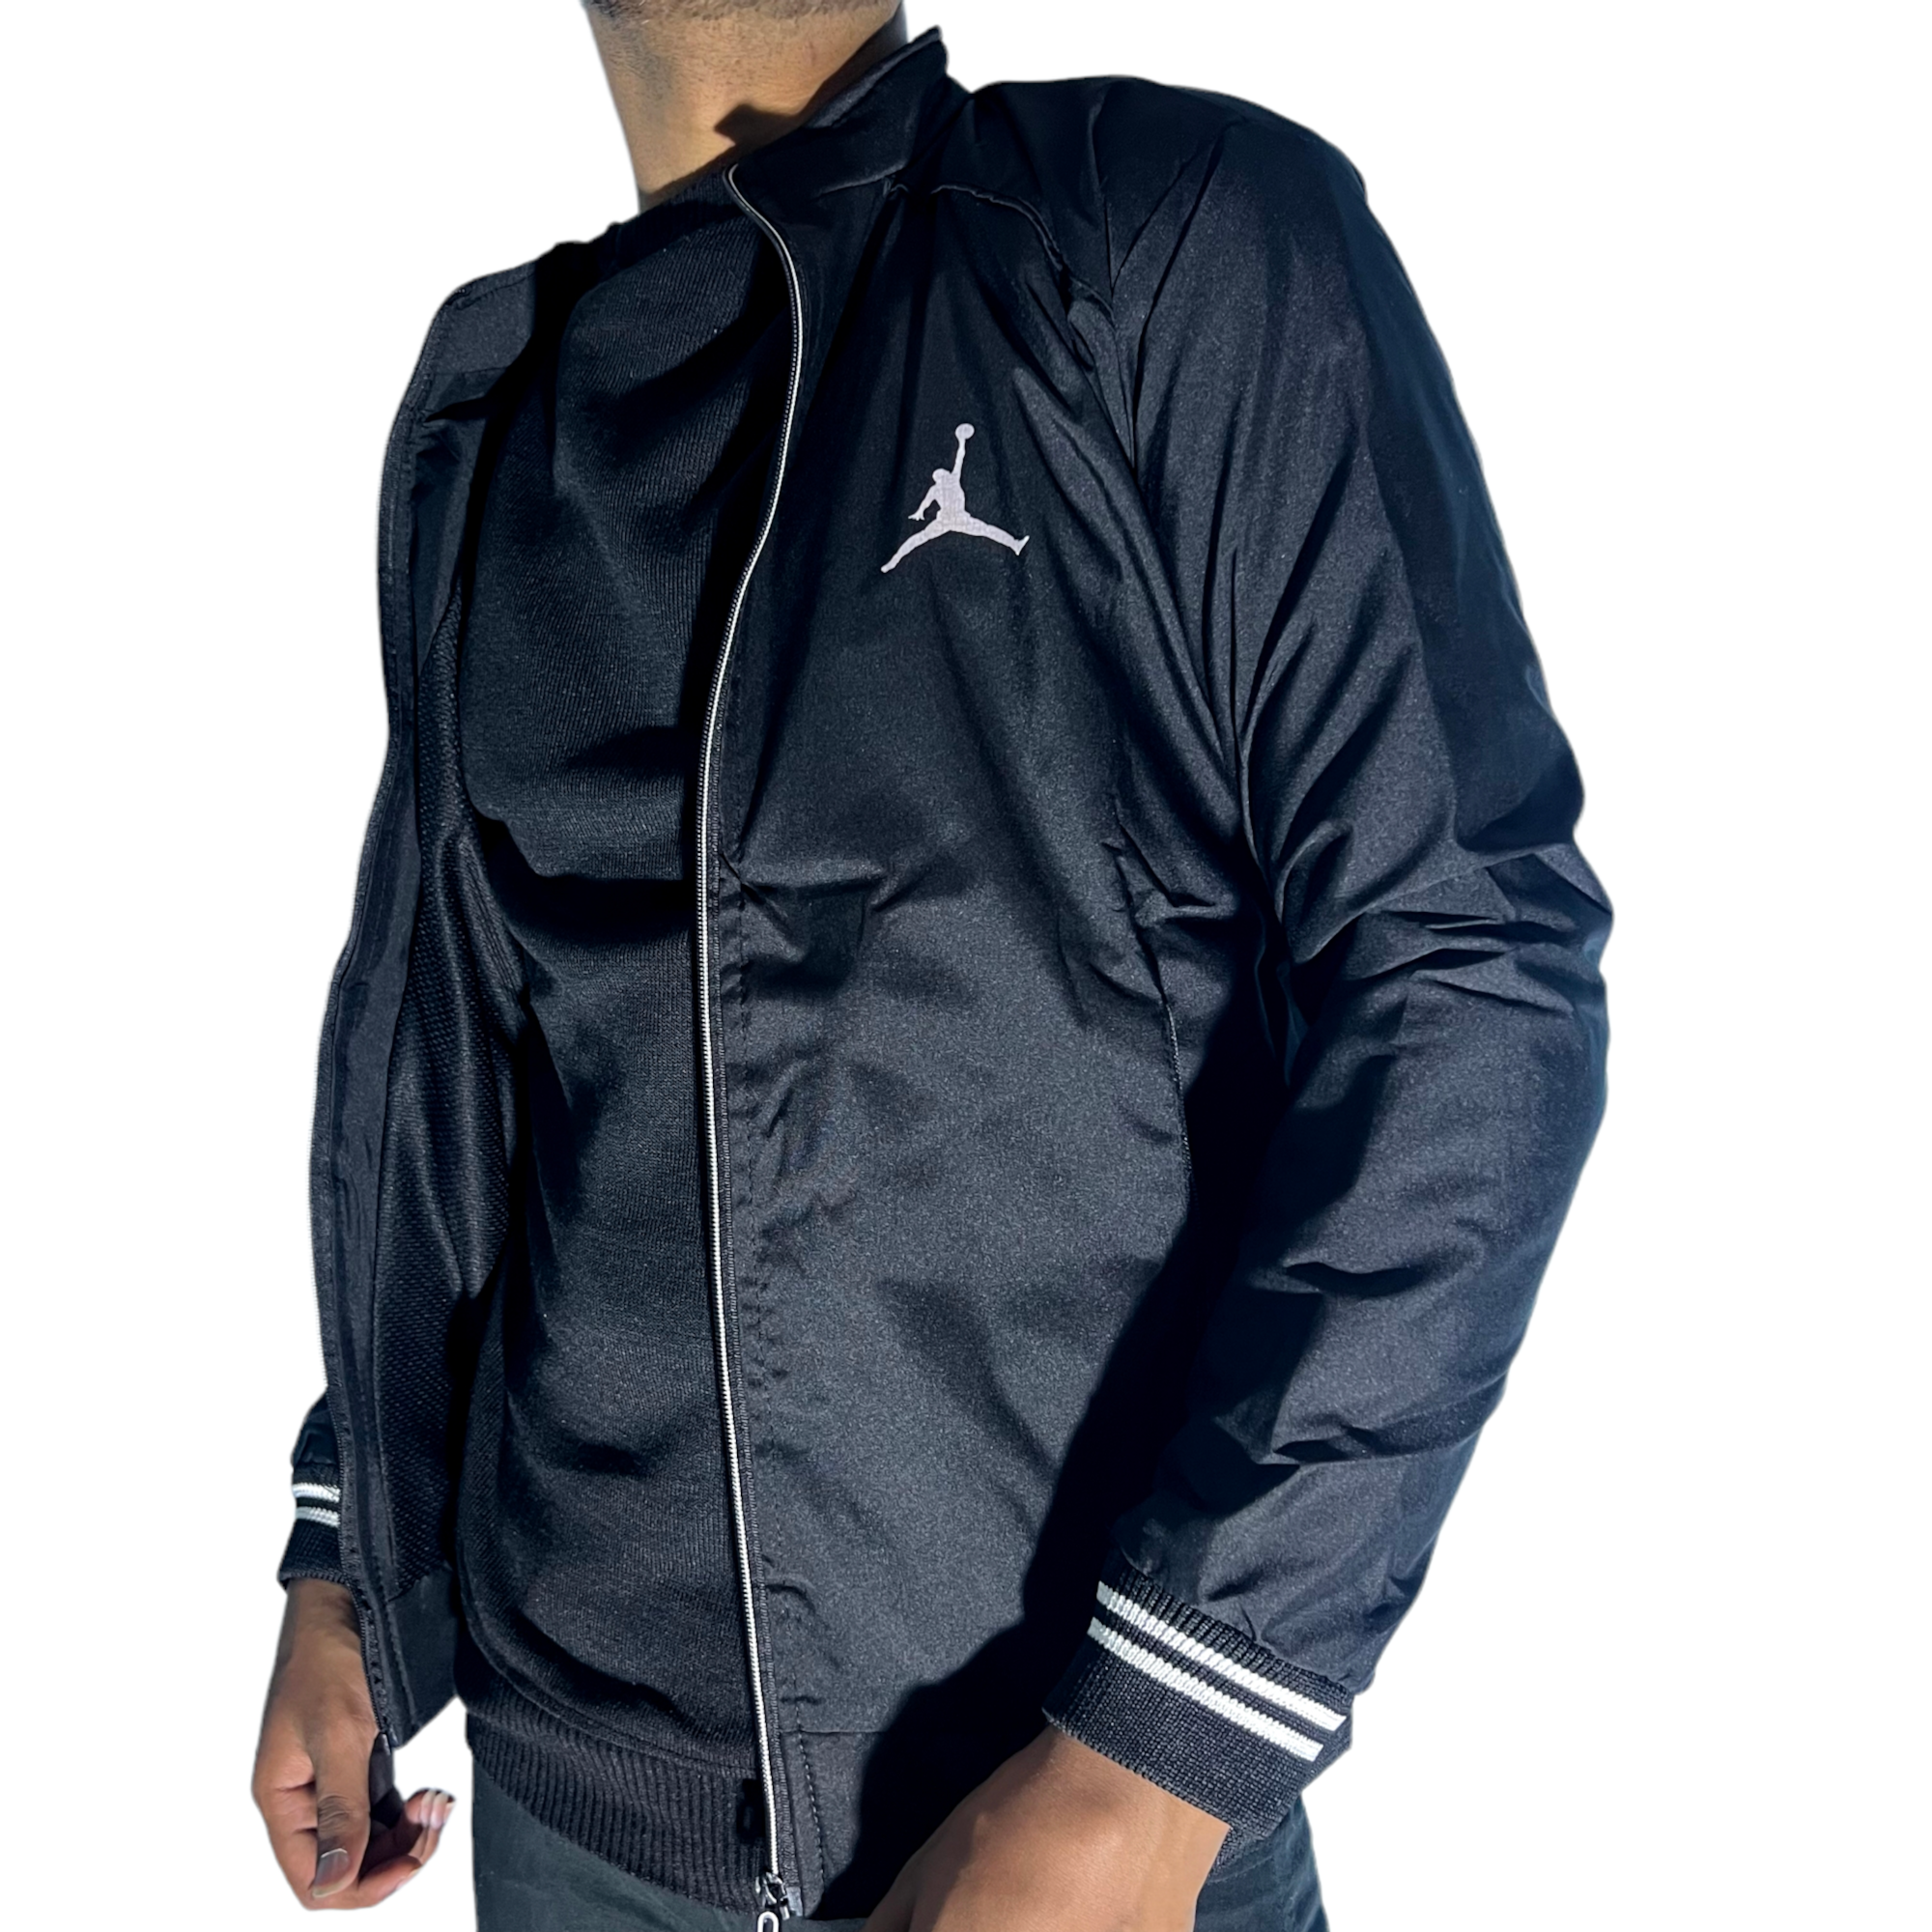 "Nike Windcheater - Black Stylish and Weather-Resistant Outdoor Jacket